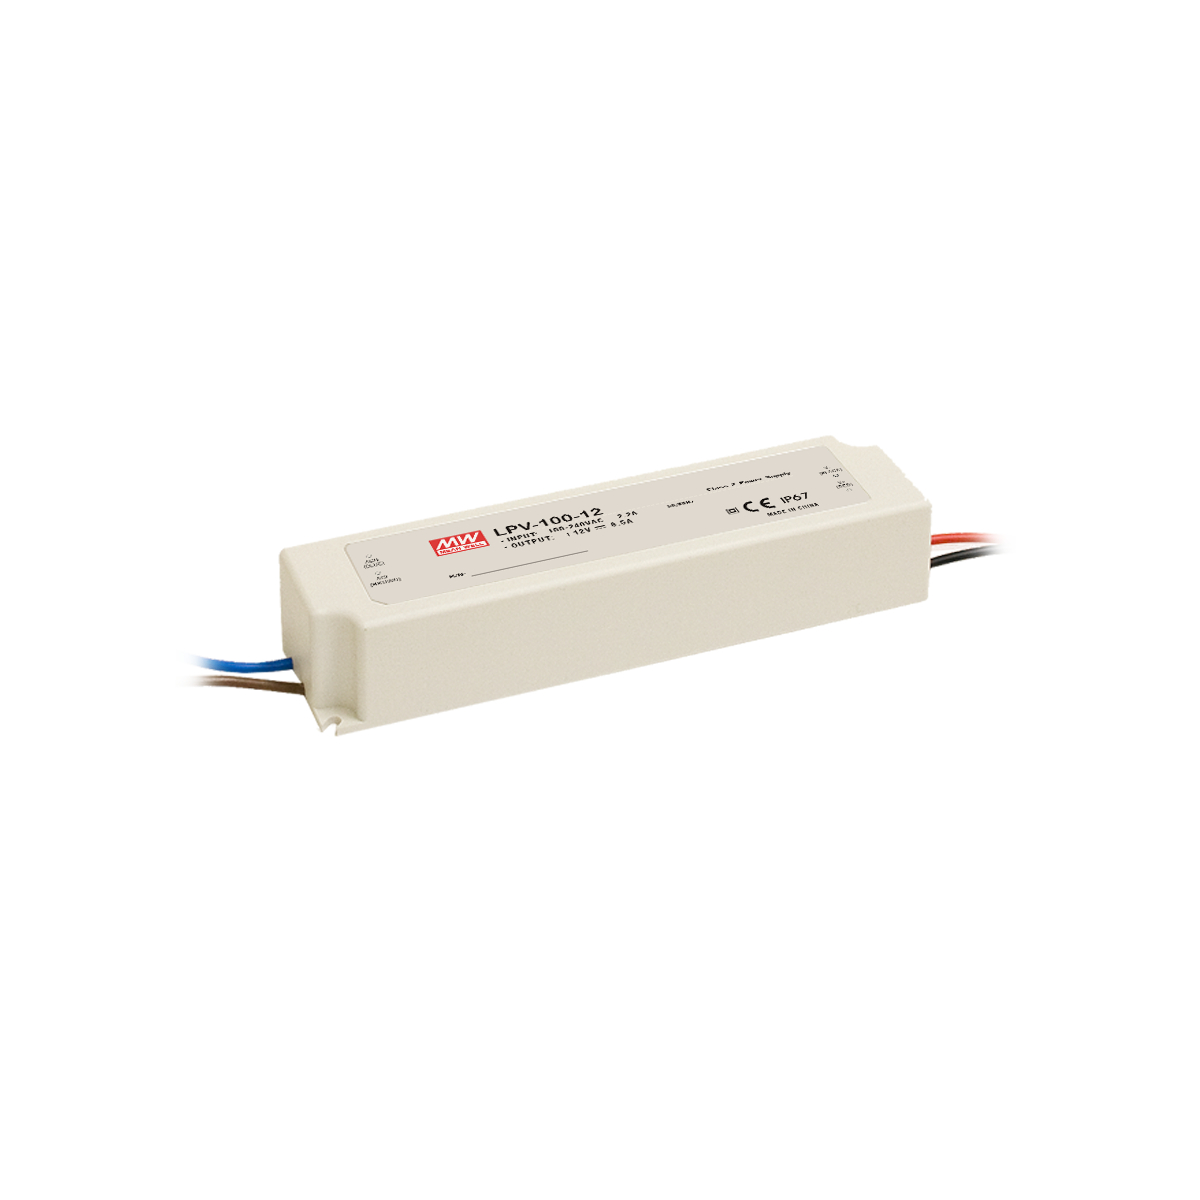 5V LED switching power supply1 2A 60W (LPV-100-5)